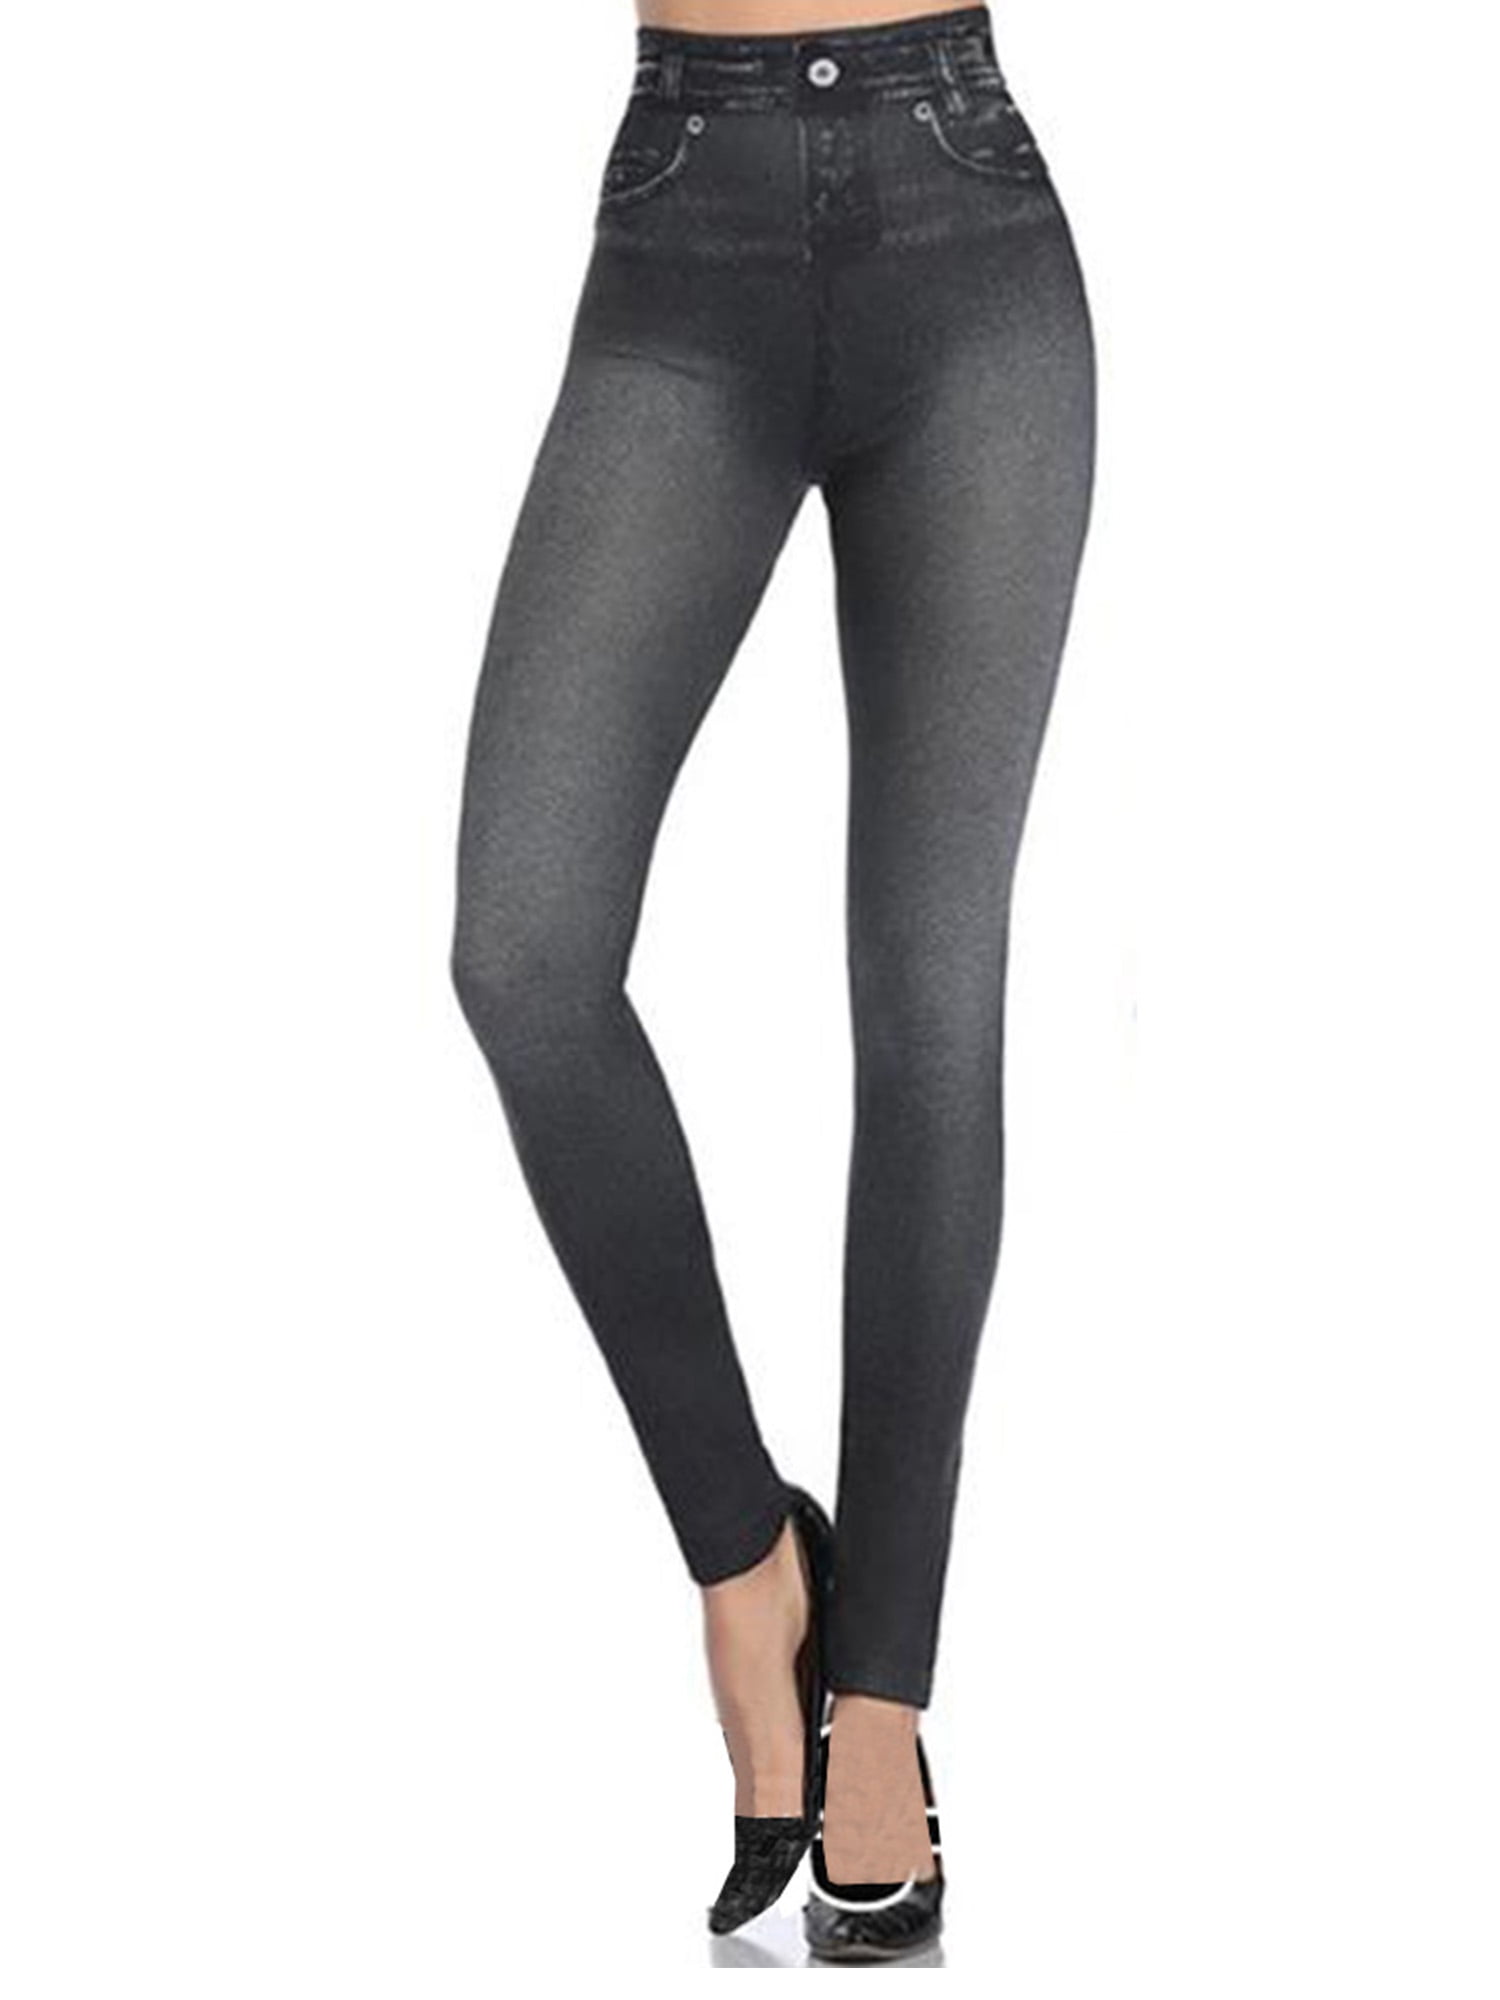 LilyLLL Women Skinny Stretchy High Waist Denim Jeans Leggings Jeggings  Trousers Plus Size - Walmart.com